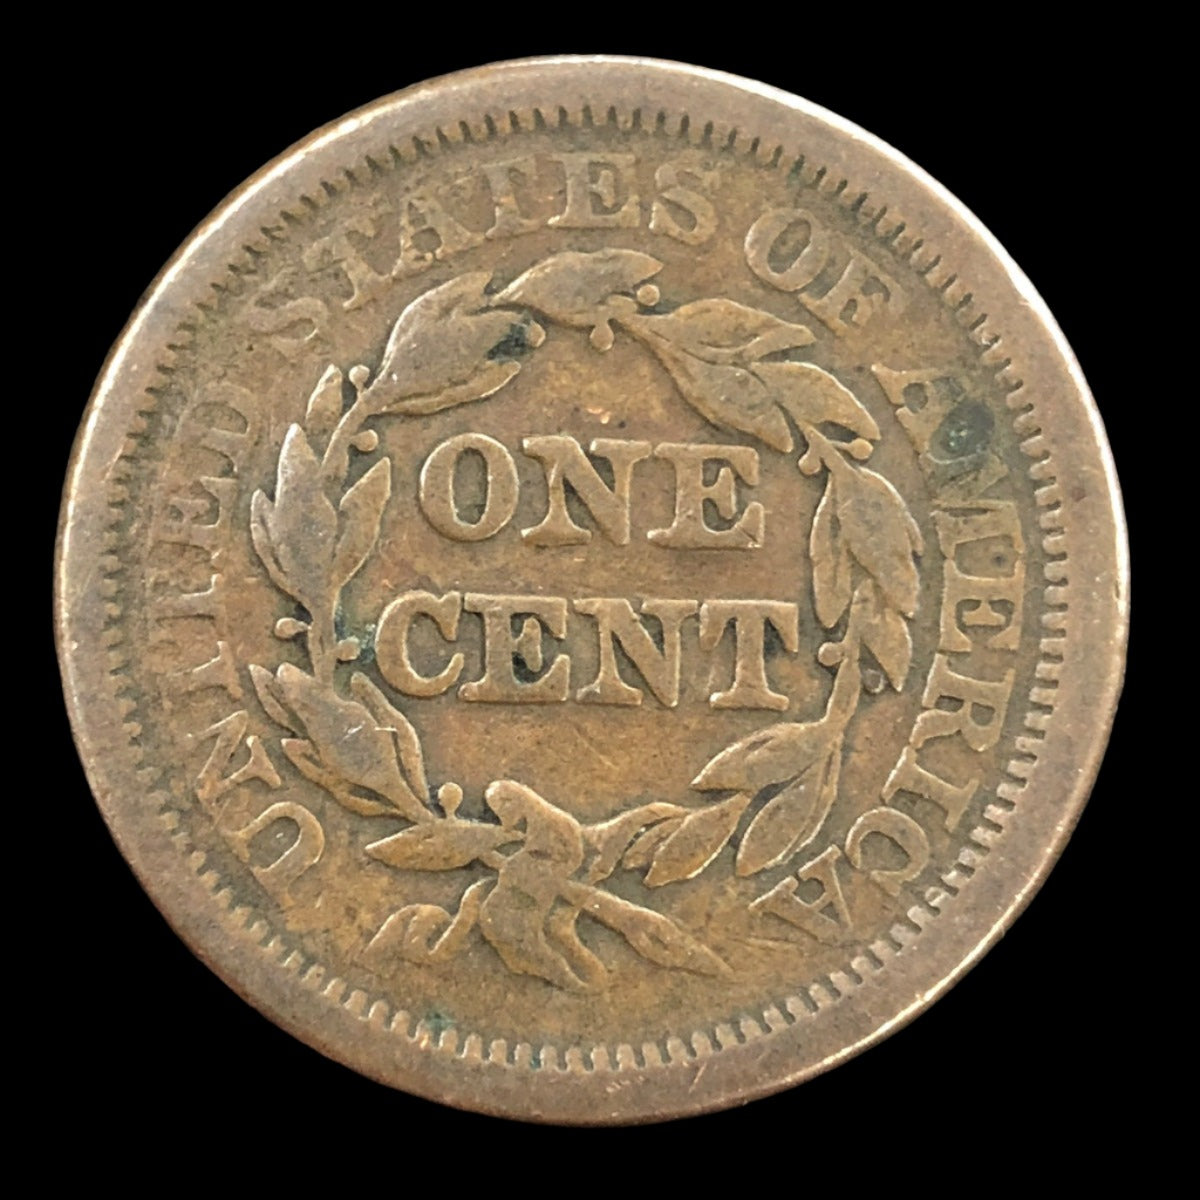 1850 Braided Hair Large Cent (F)